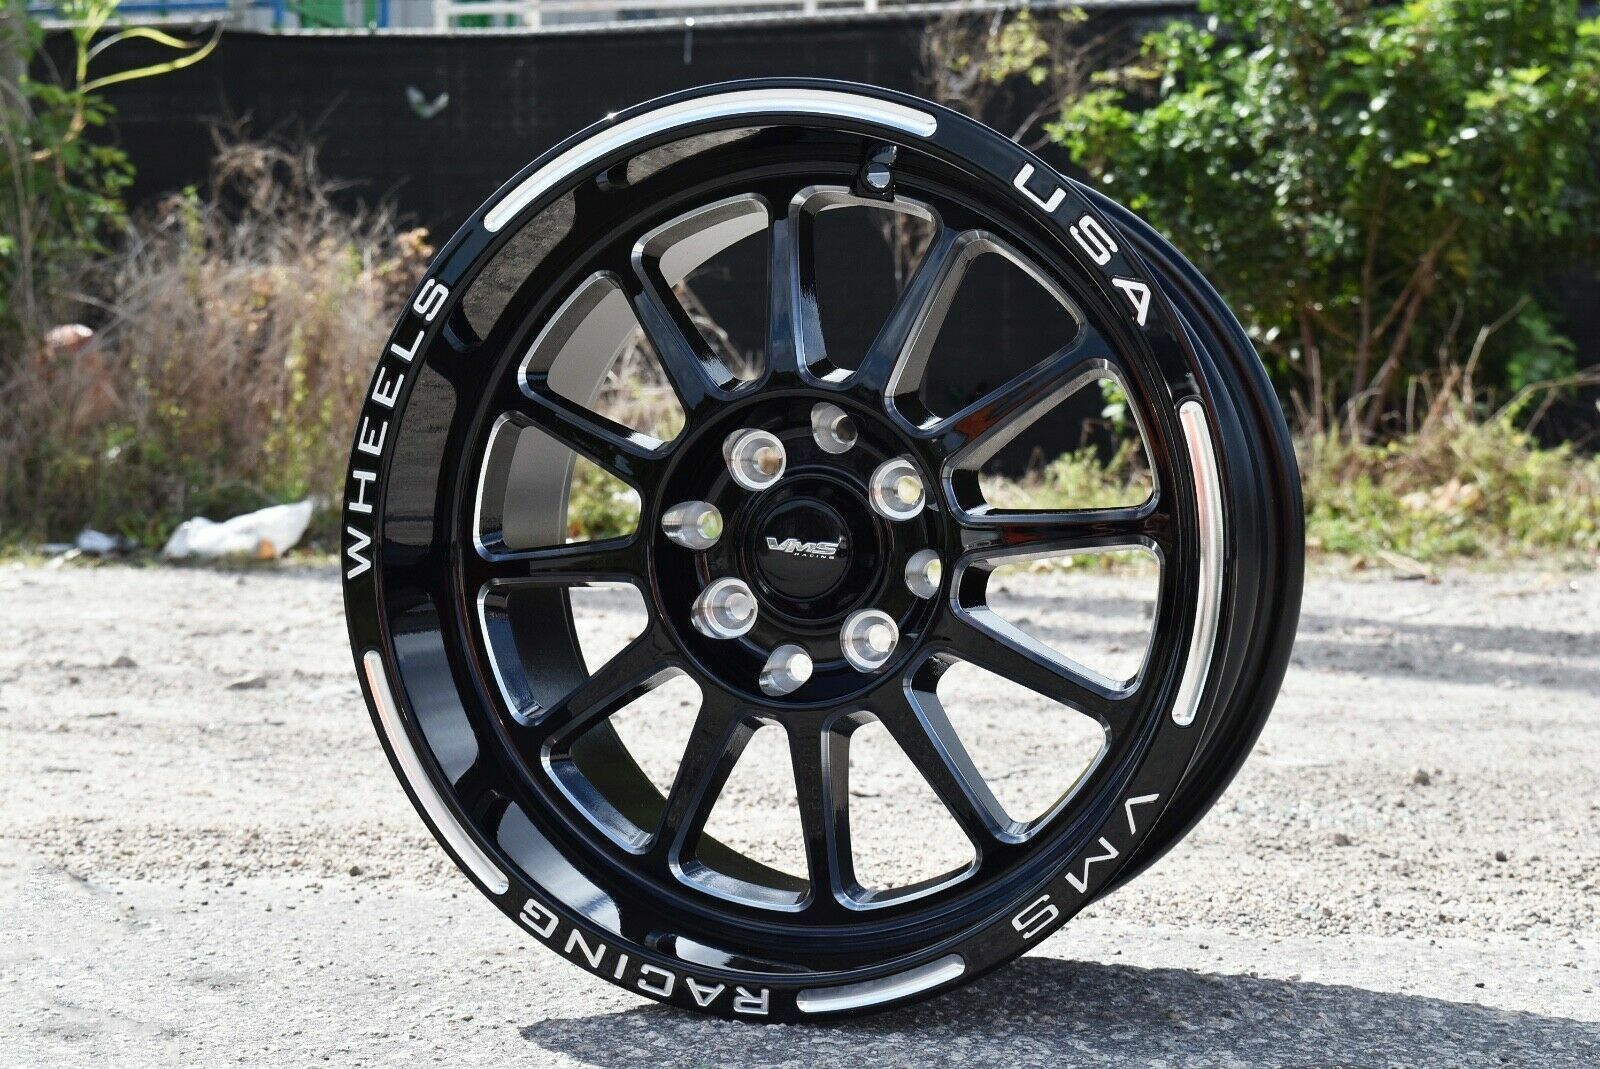 2x VMS Racing Black Hawk Milled Drag Rims Wheels 15x8 5X100 5X114 +20 (5.3